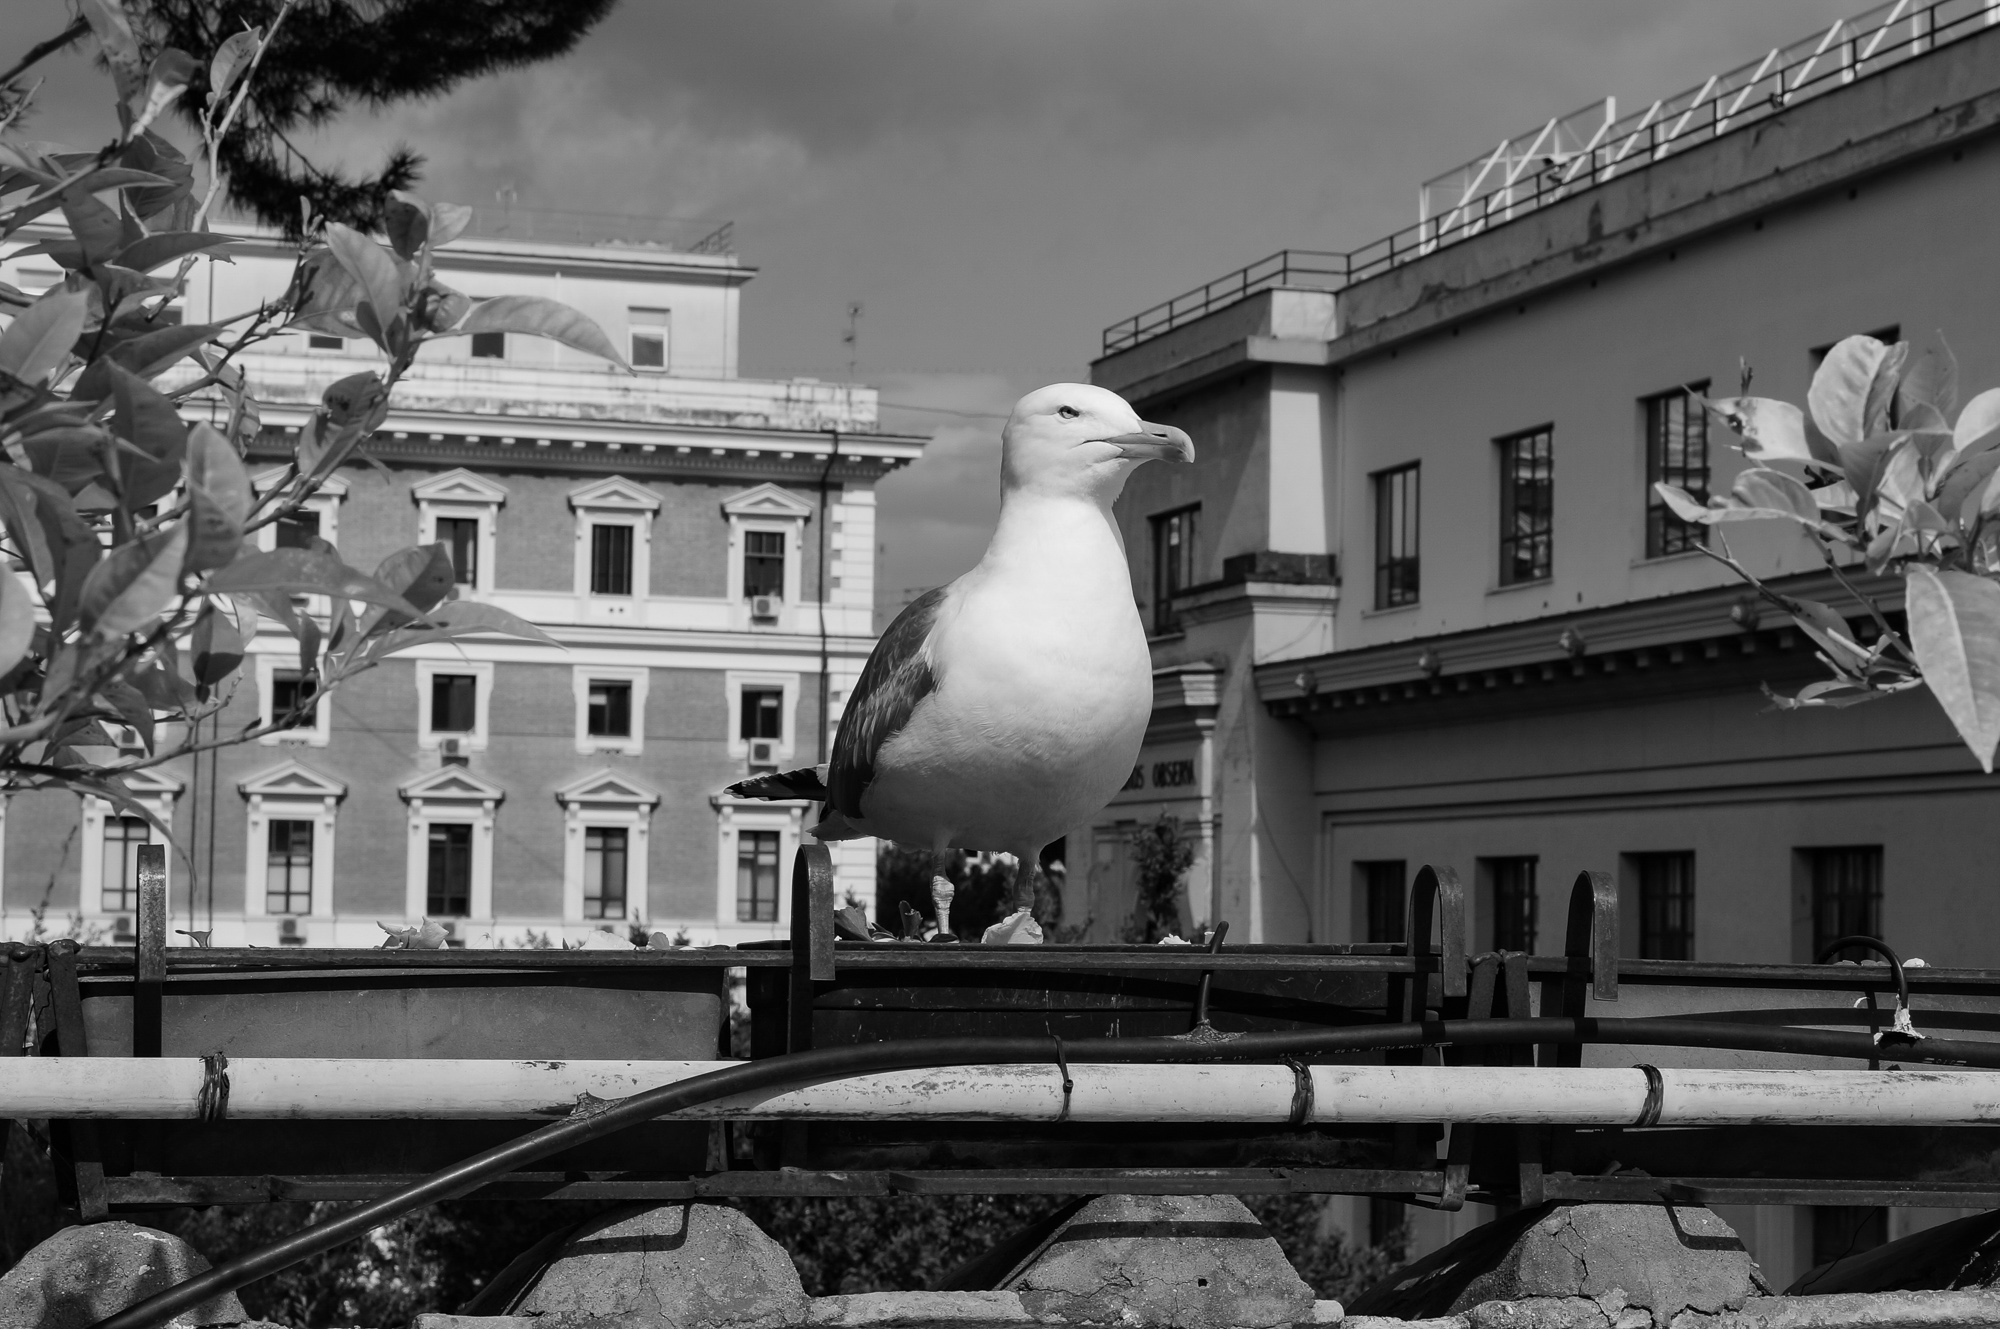 Sea gull, Rome 2018